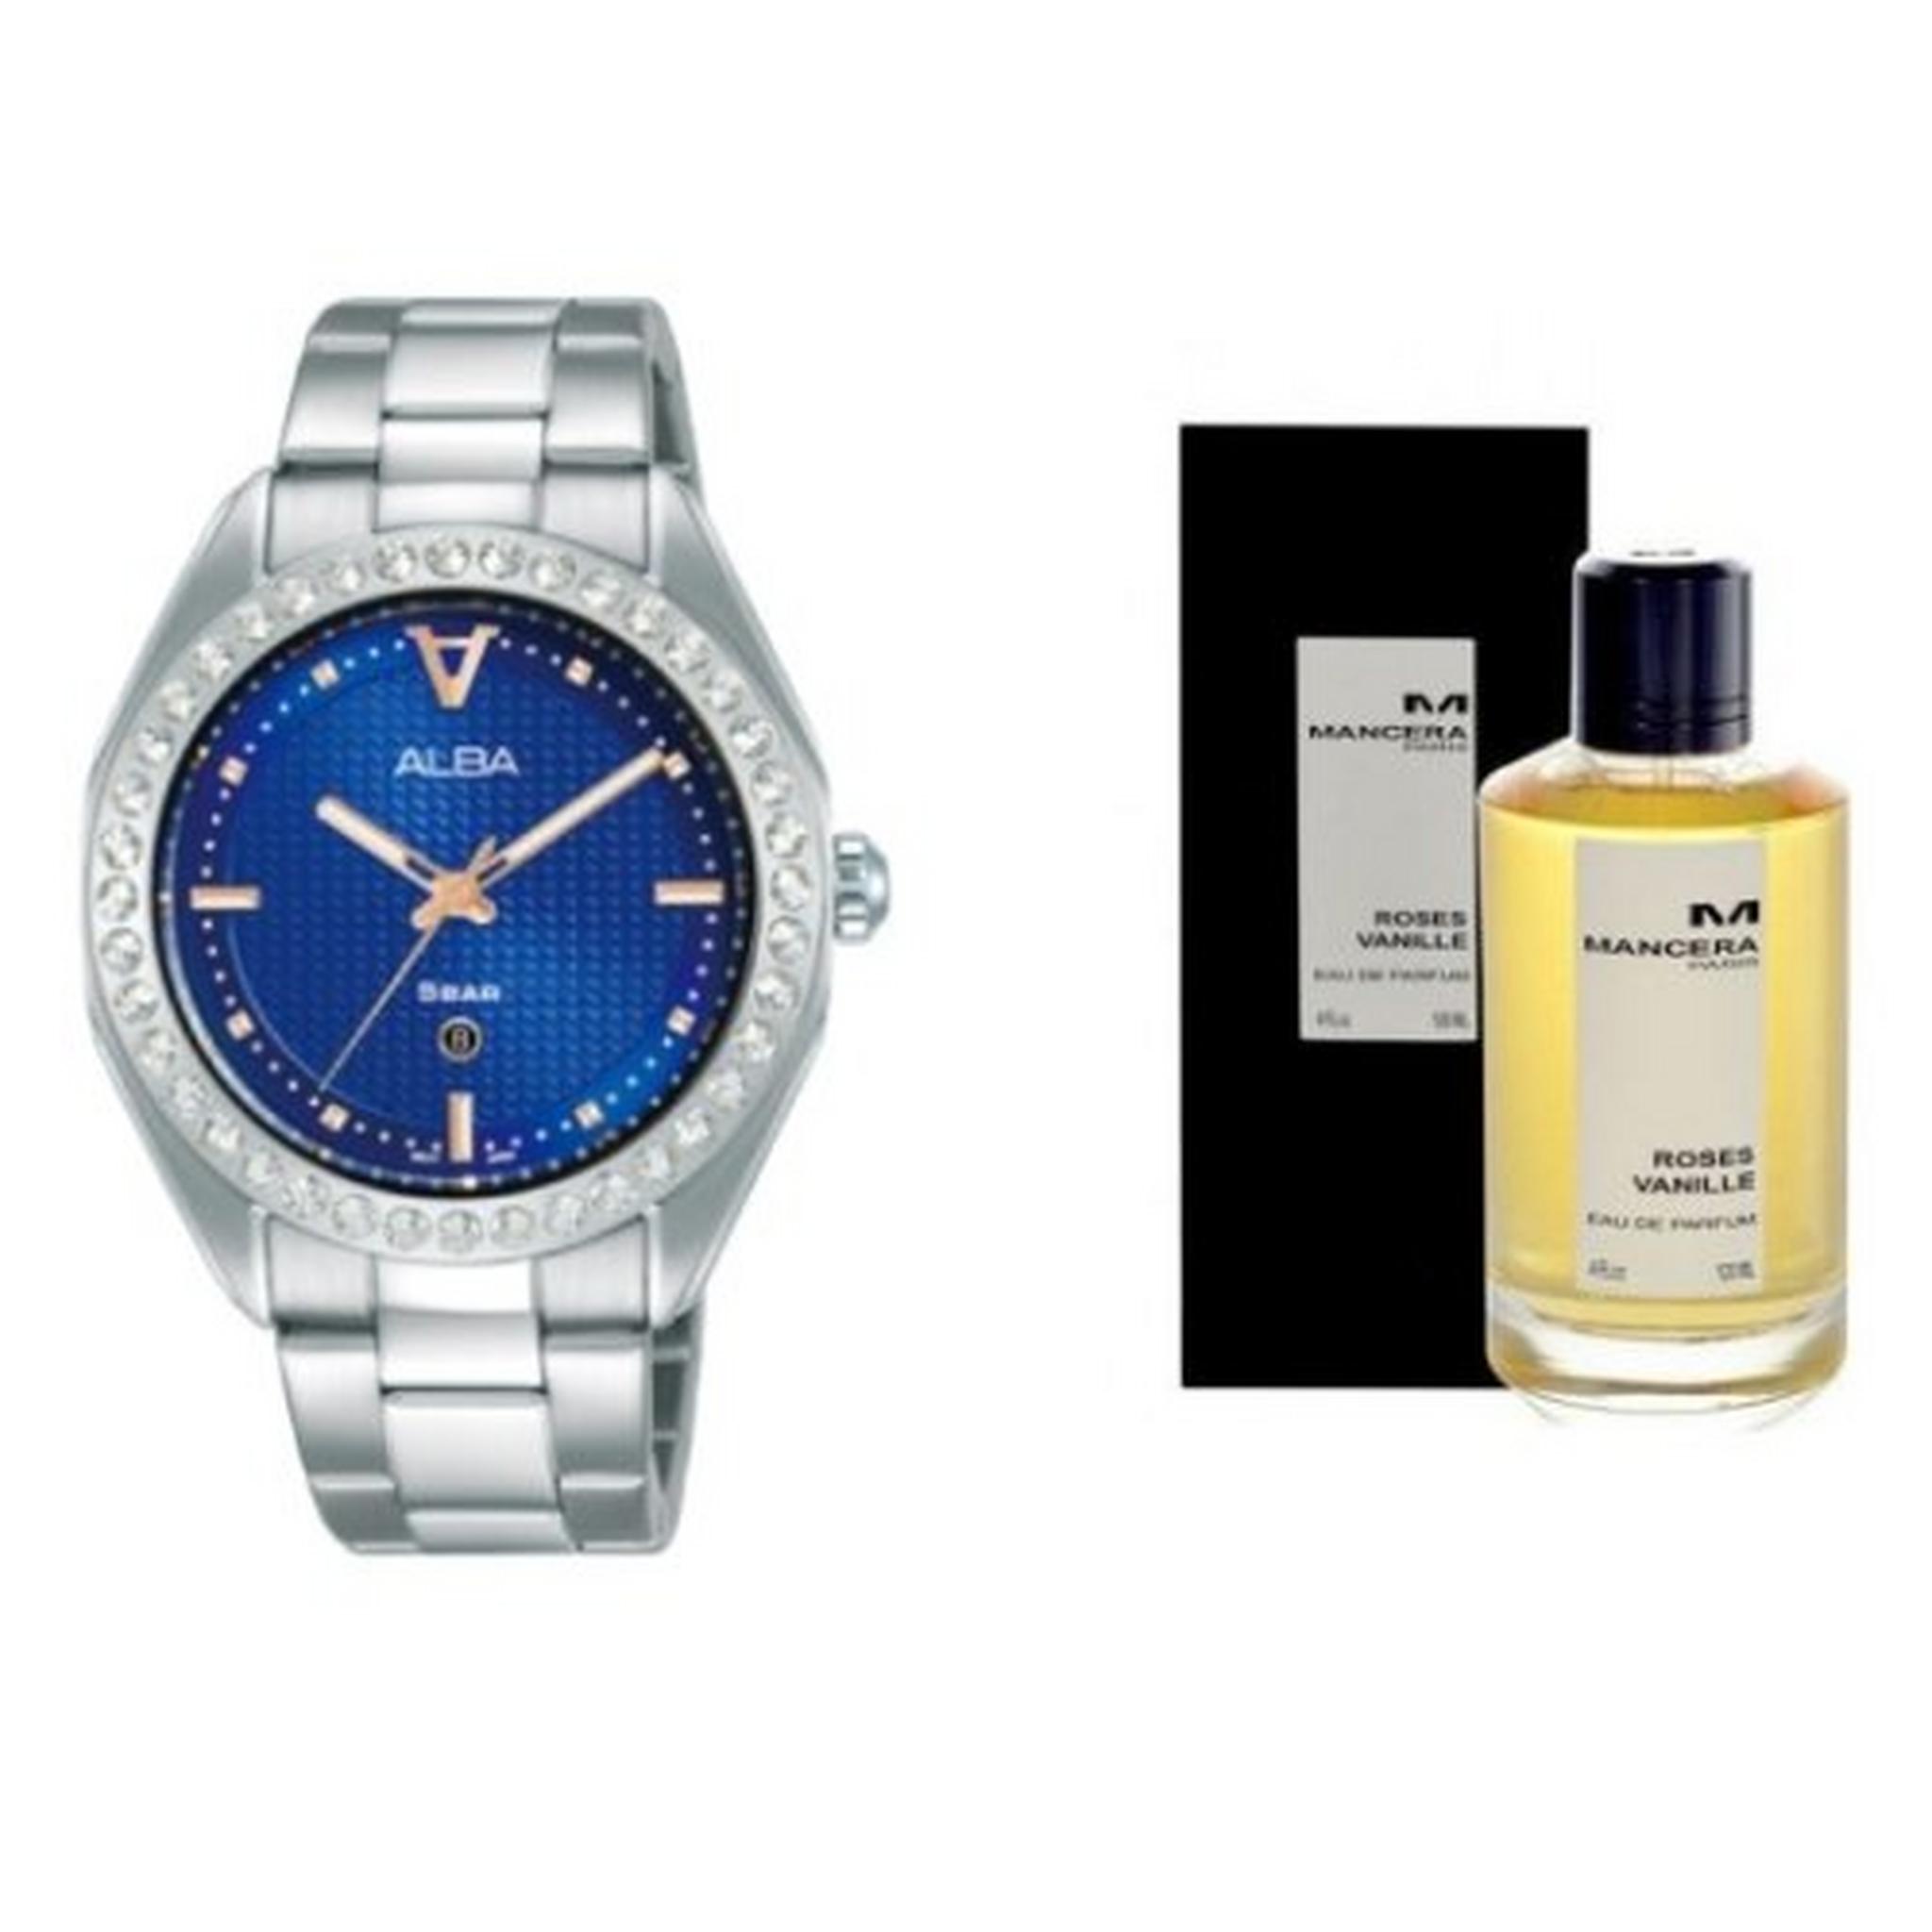 Alba 36mm Women's Analog Watch + Roses Vanille by Mancera For Women 120 ML Eau de Parfum + Alba Gift Watch Box